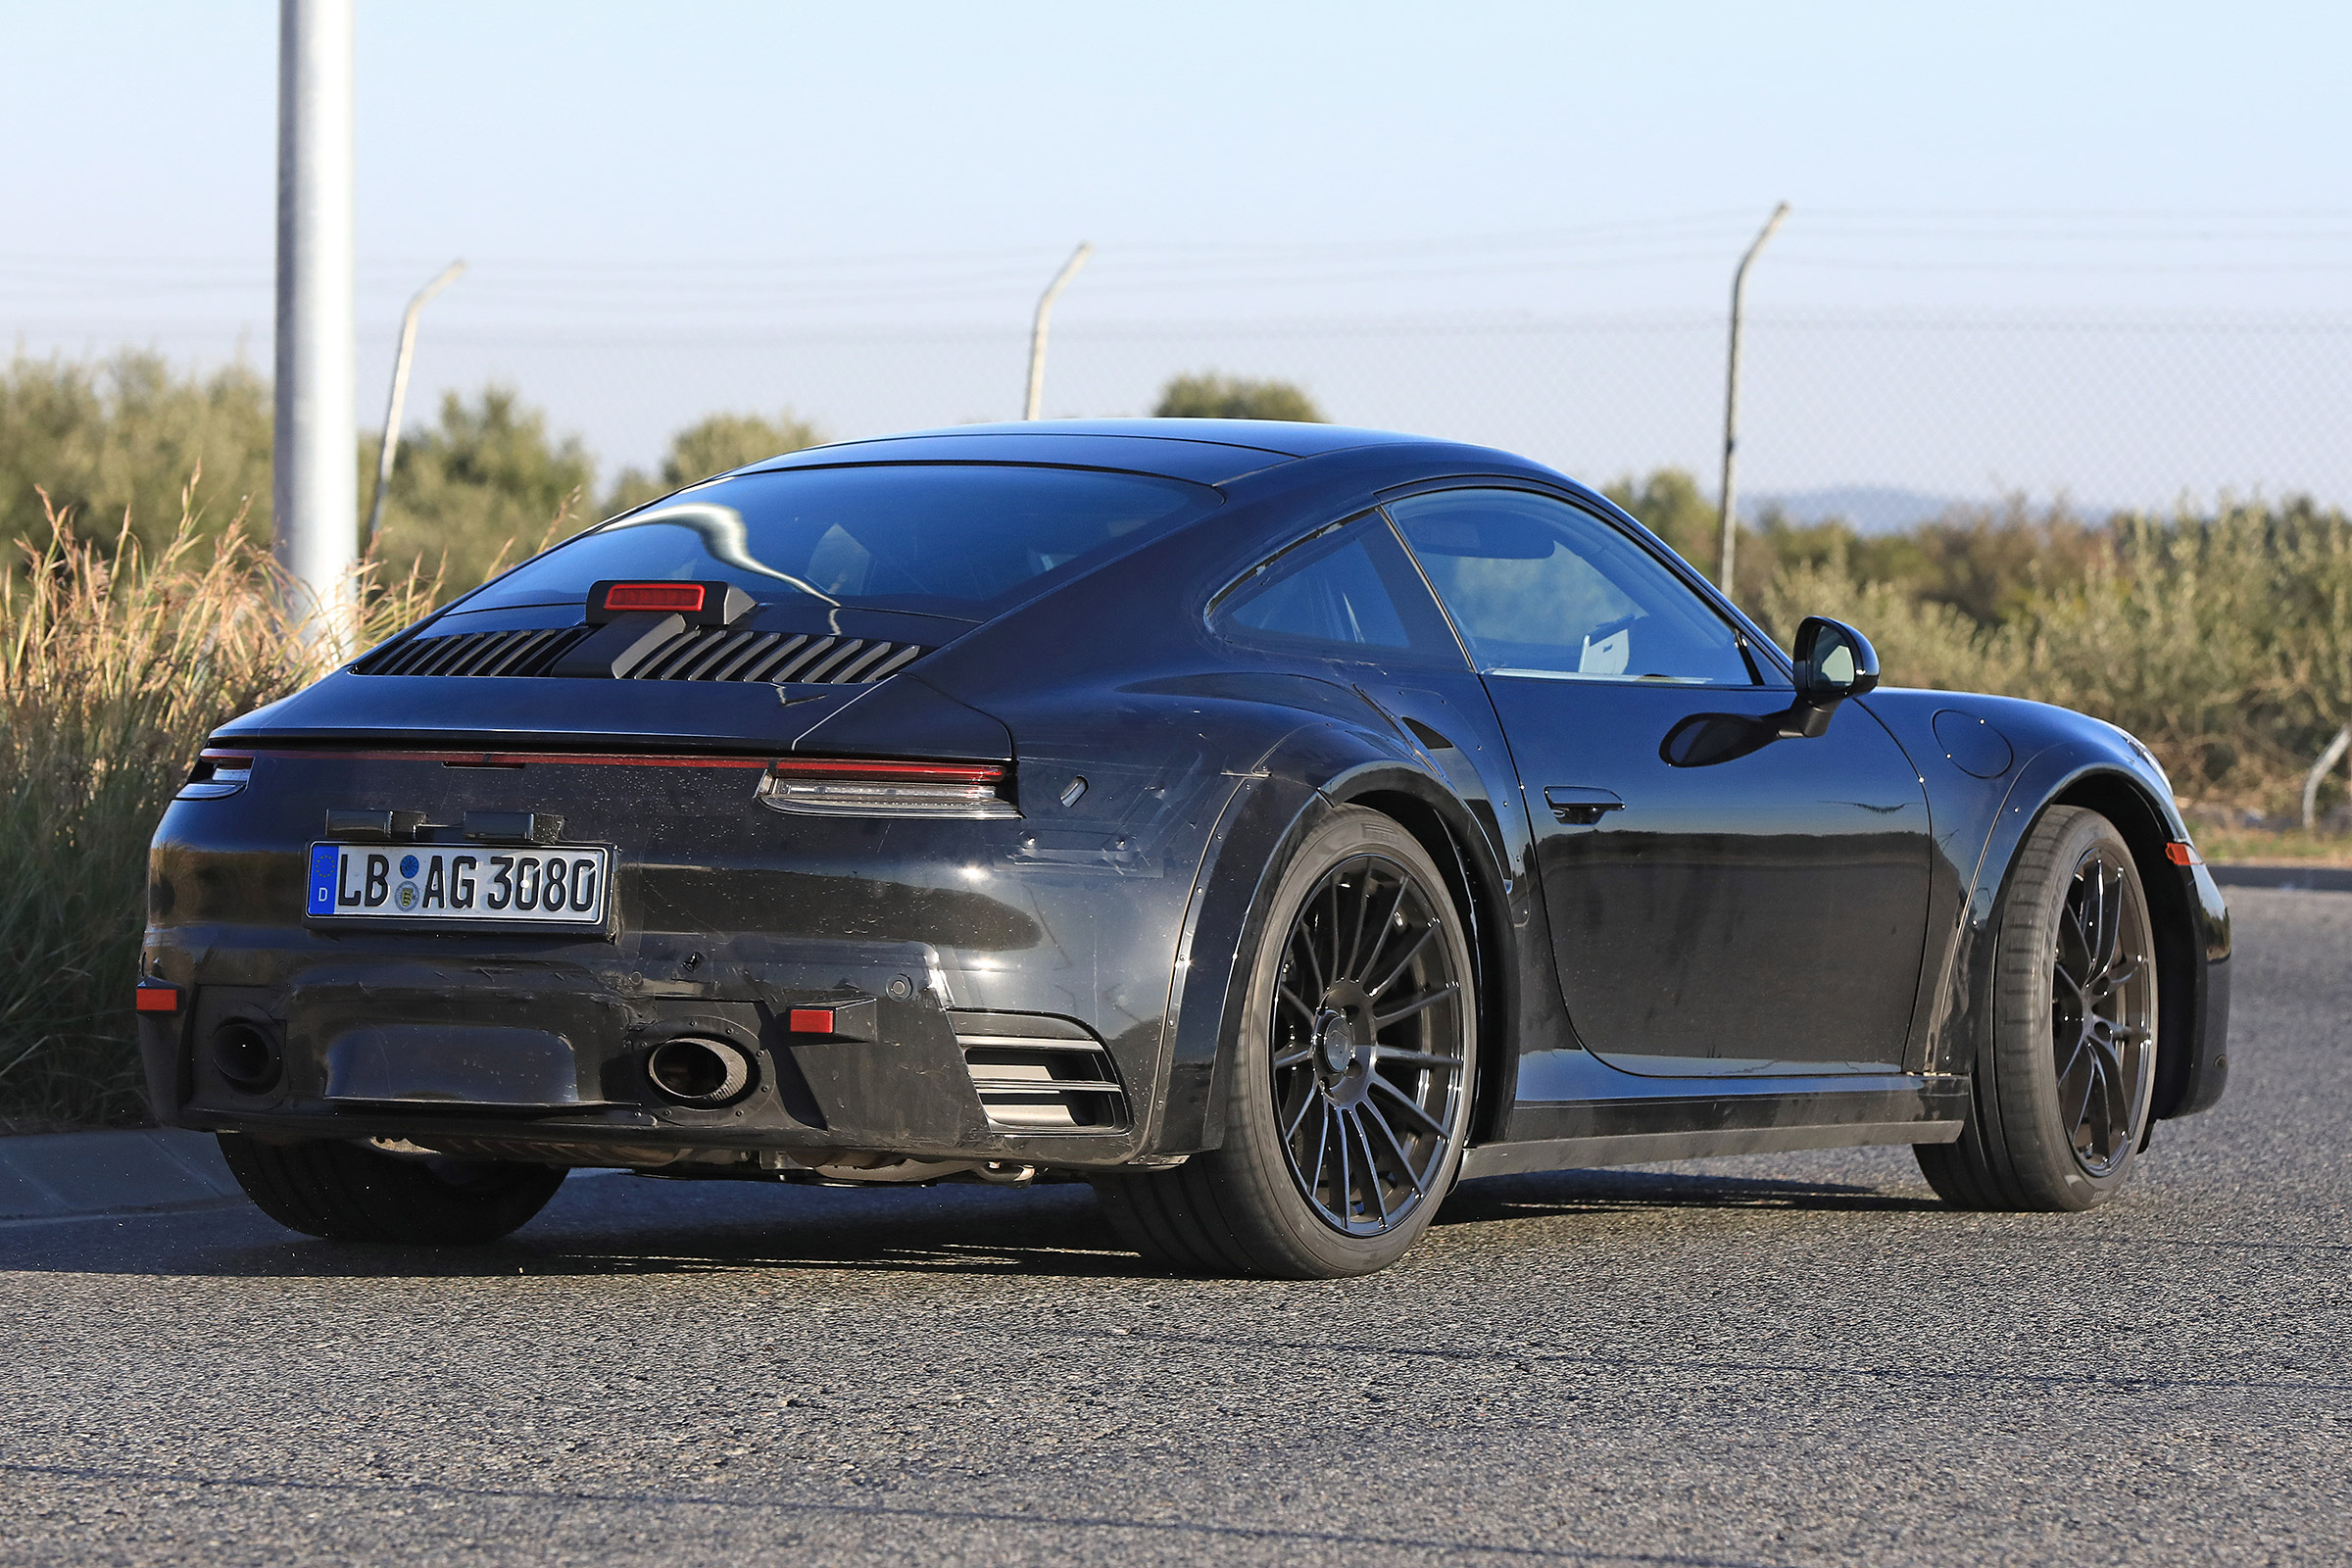 Porsche 911 Turbo spied - pictures | evo